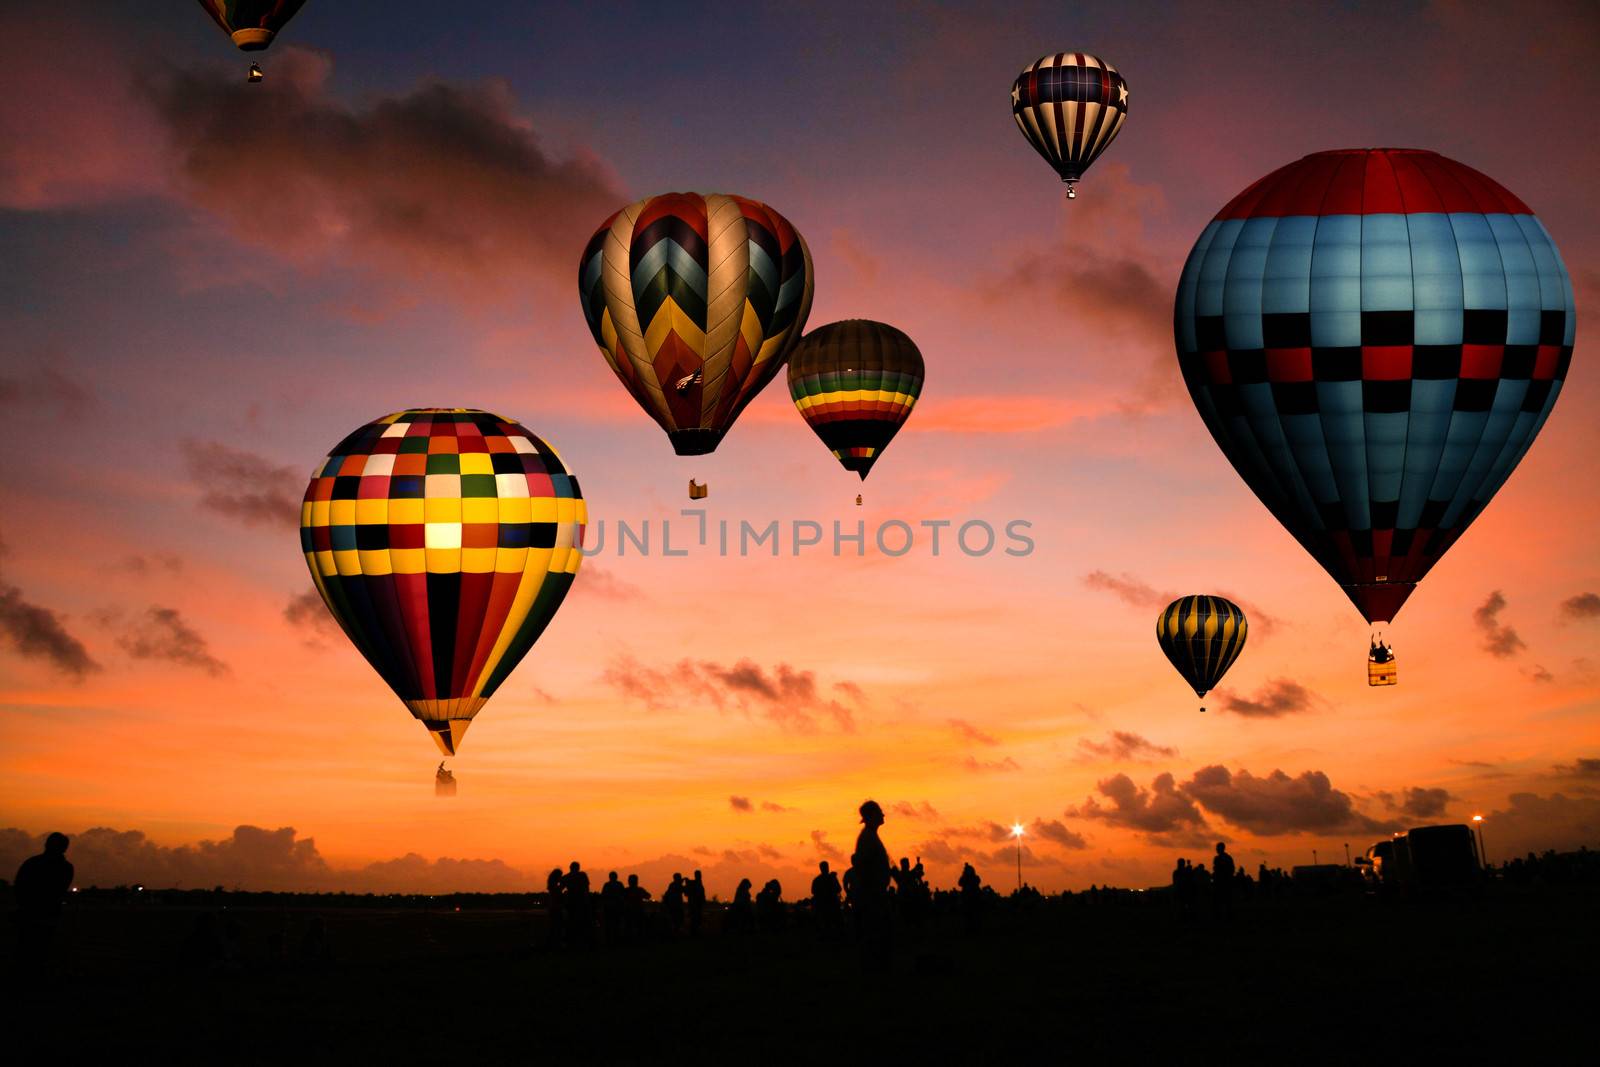 Balloon race at sunrise by CelsoDiniz